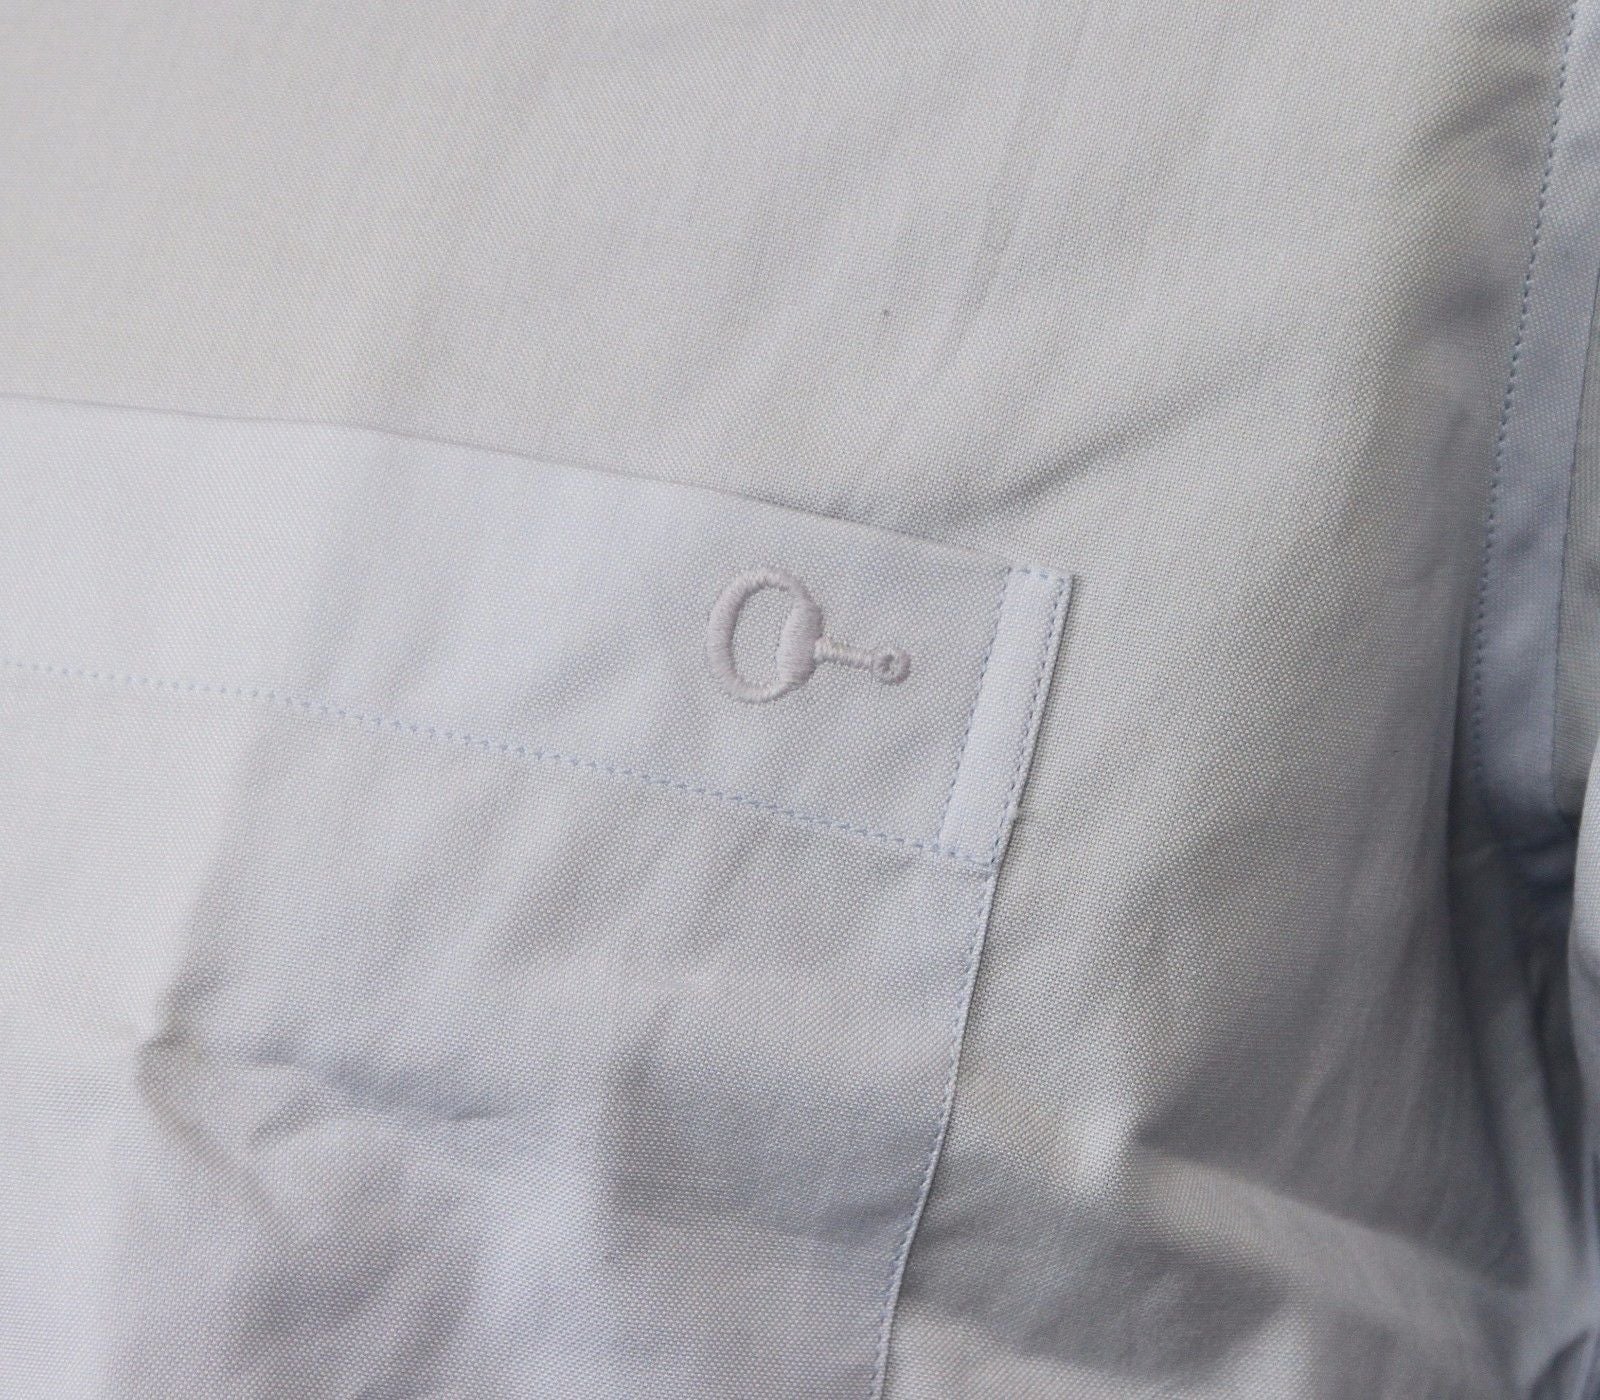 Gucci Gucci Men's Horsebit Classic Light Blue Cotton Button-Down Dress Shirt